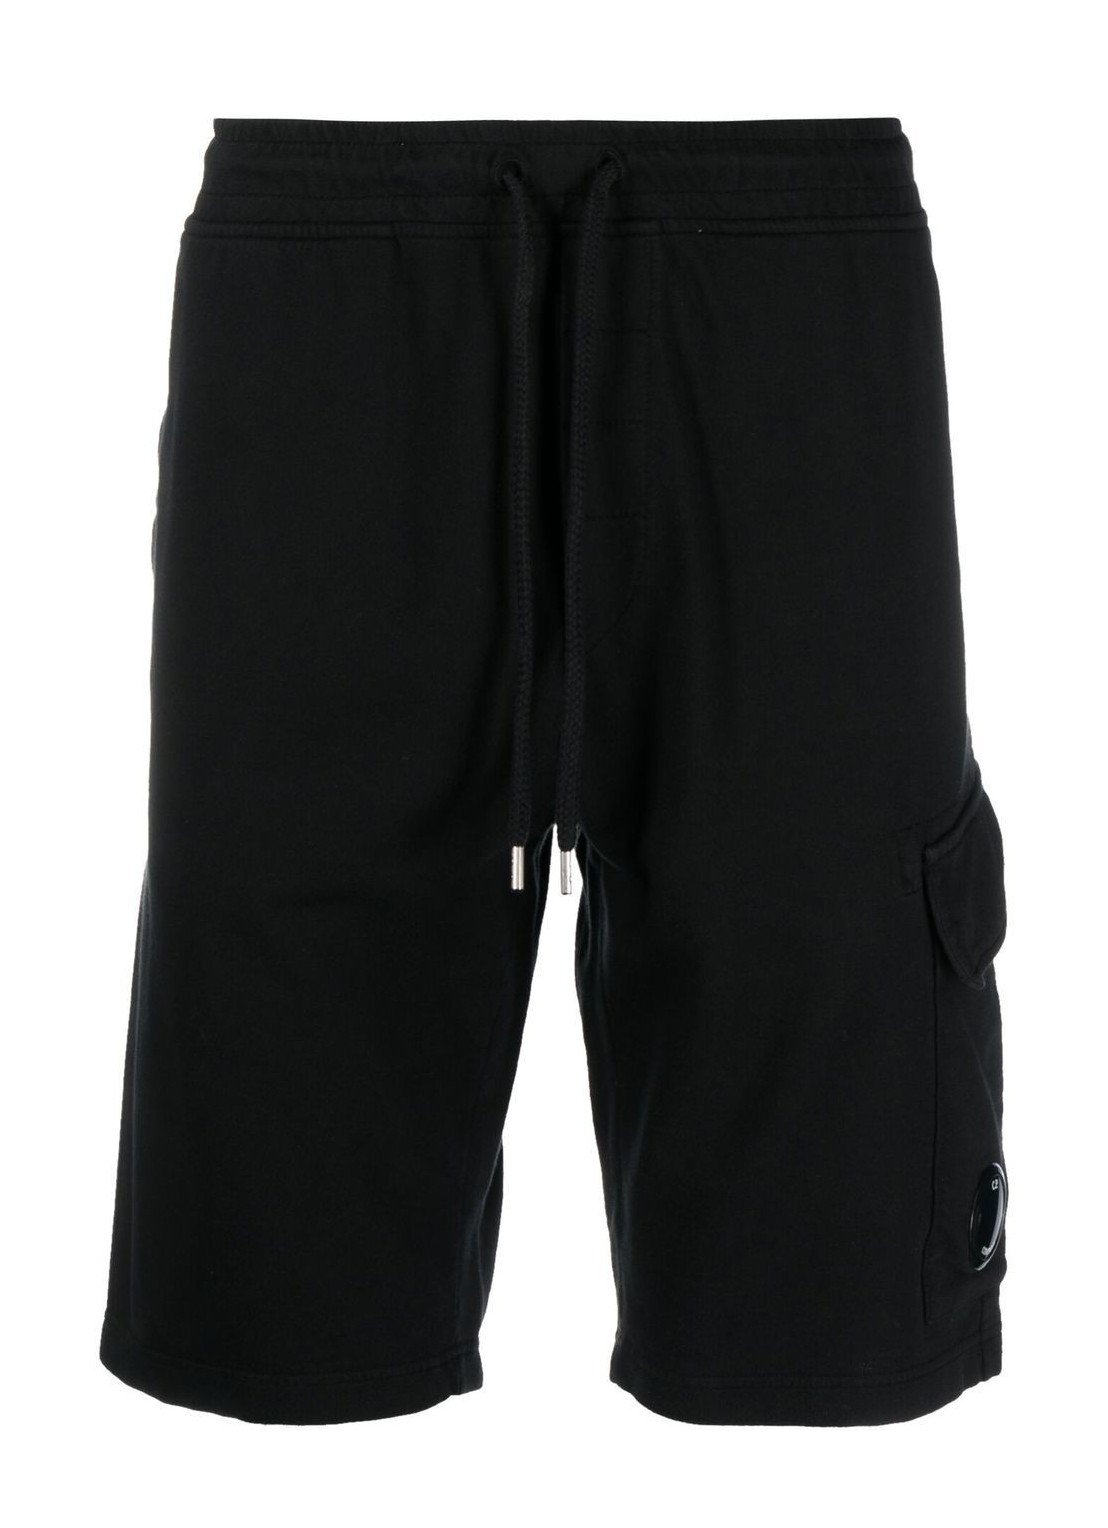 Pantalon corto c.p.company short pant man light fleece cargo shorts 15cmsb021a002246g 999 talla L
 